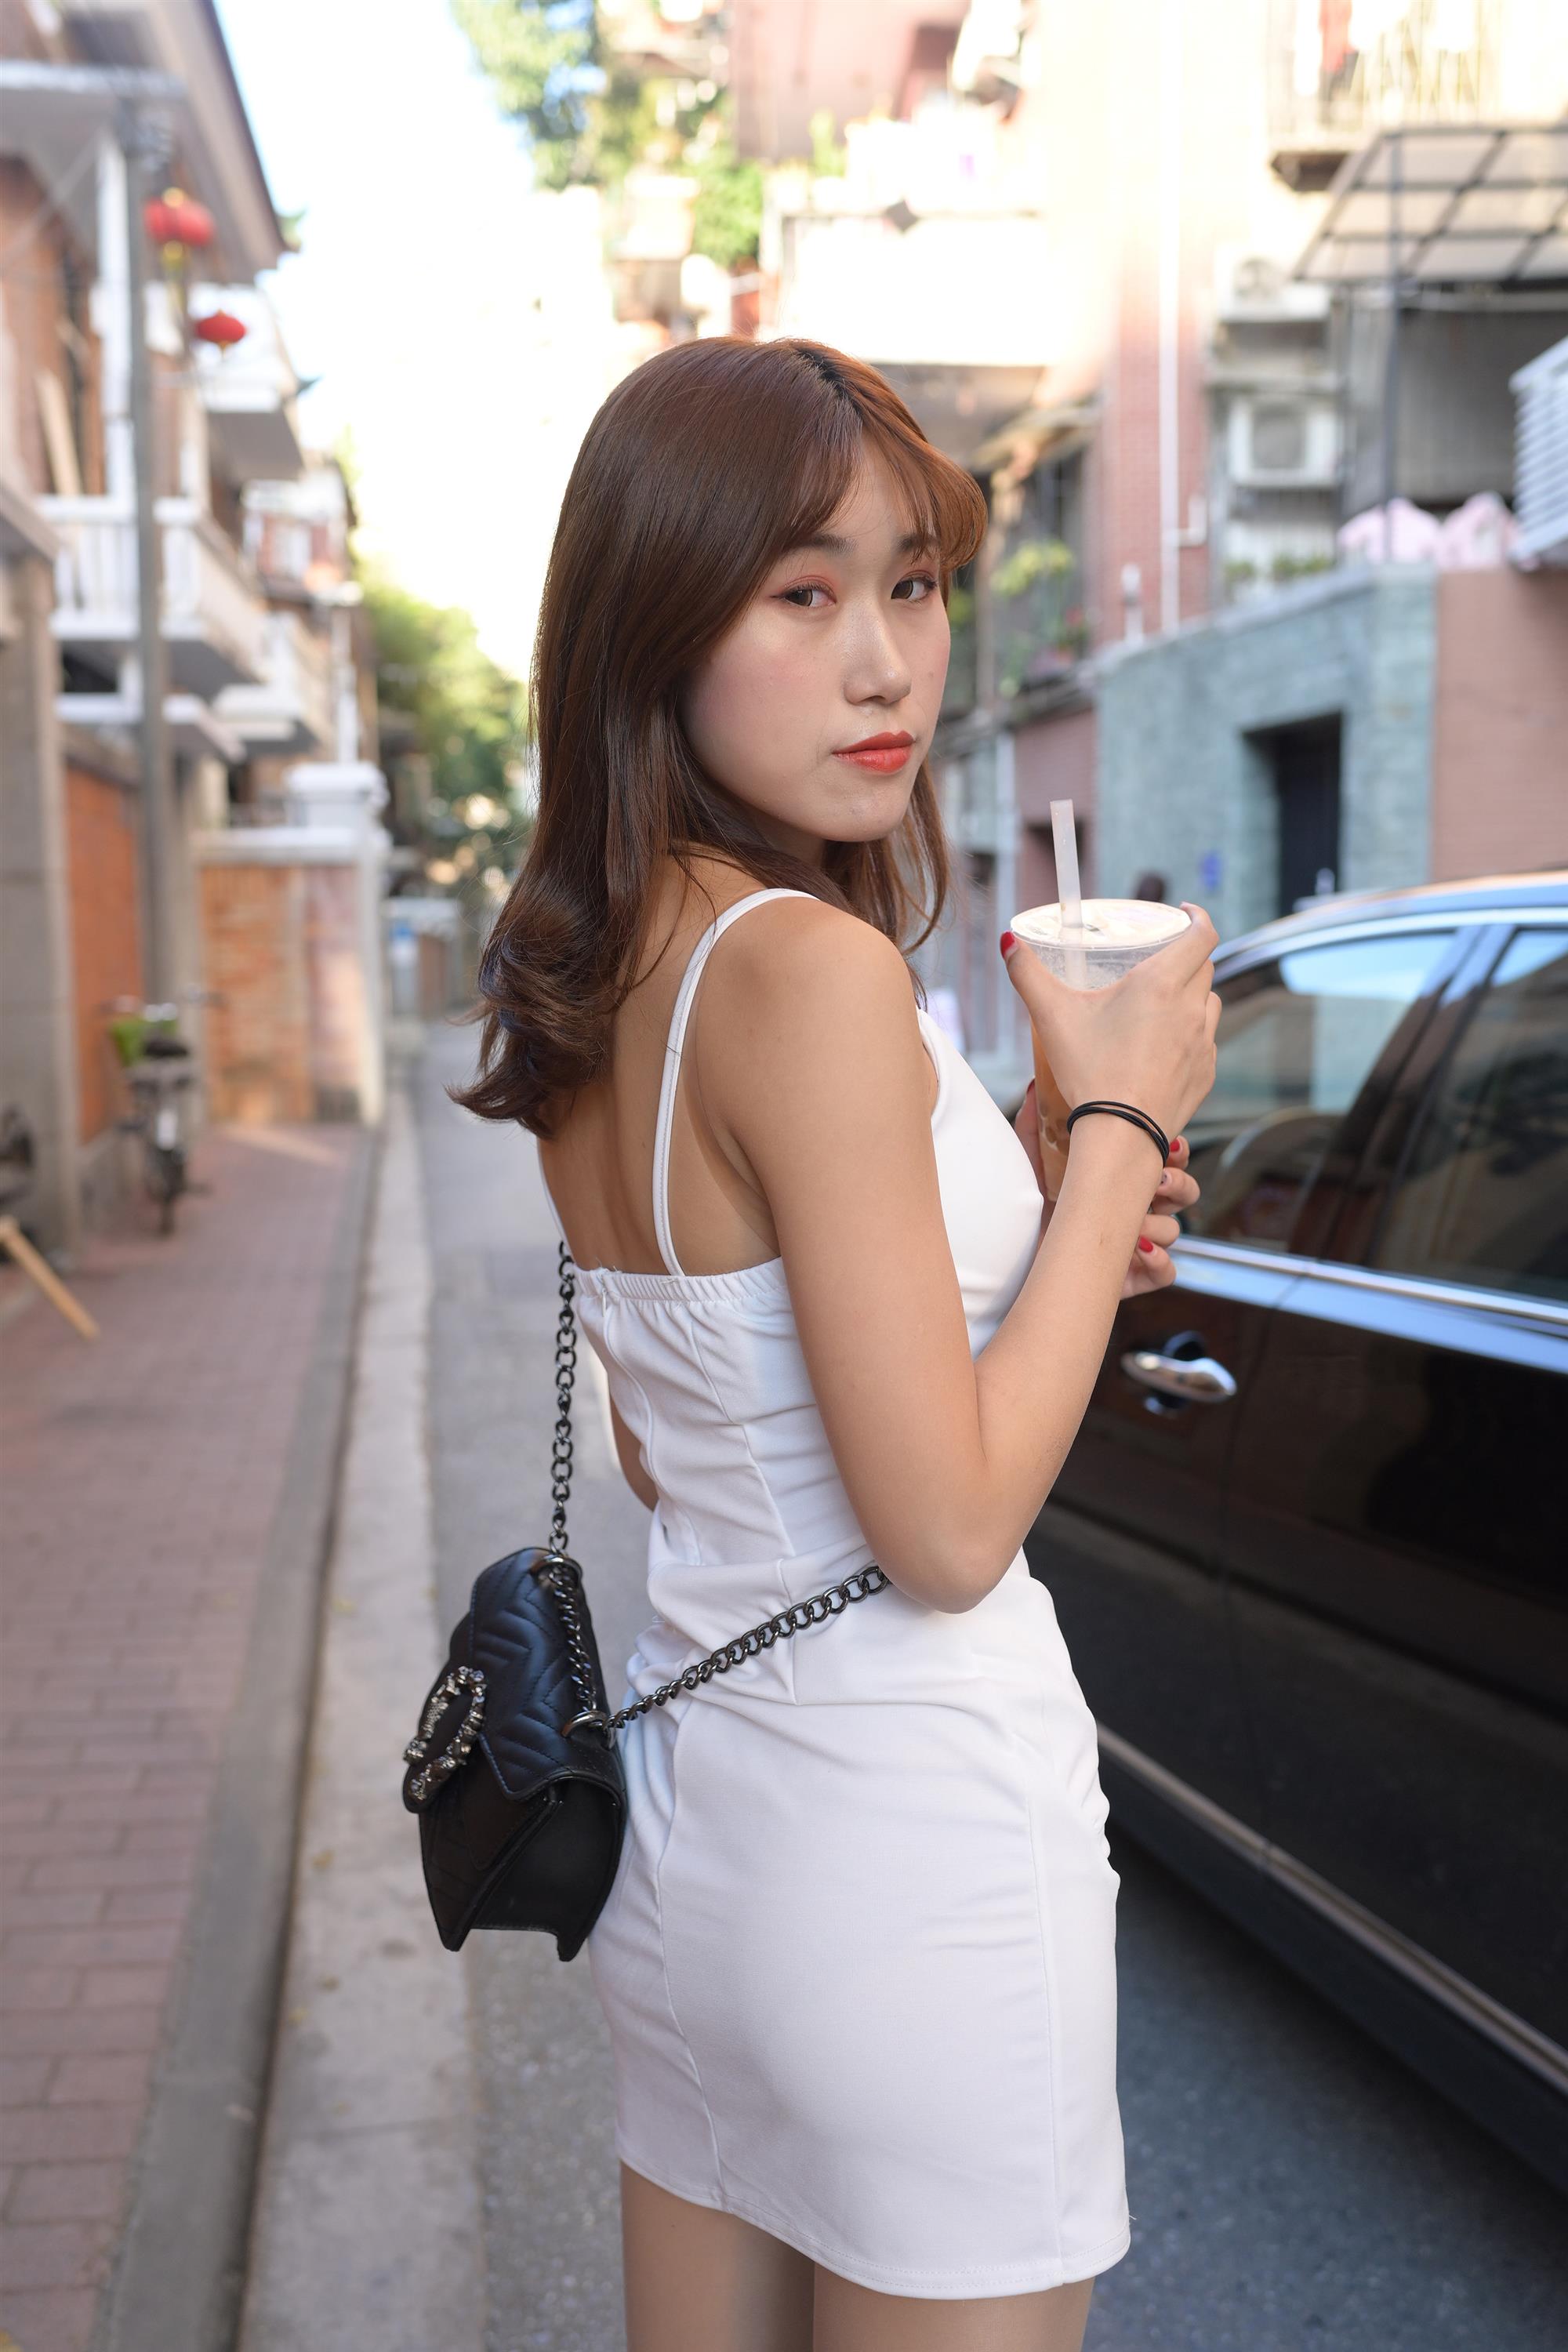 Street white dress and high heels - 17.jpg